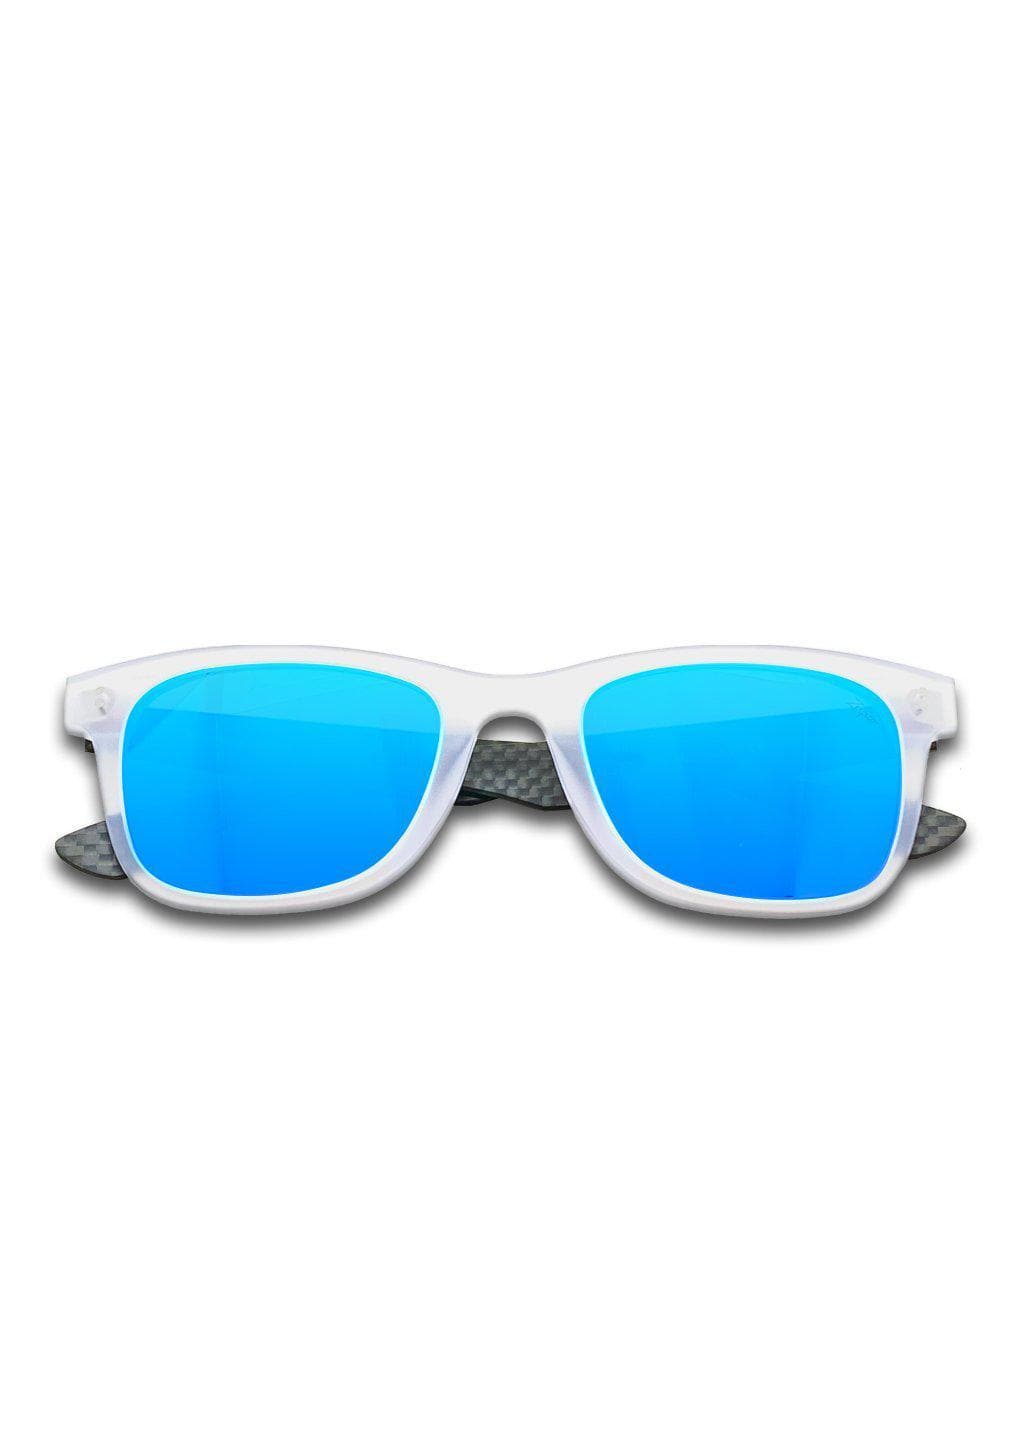 Hybrid - Atom, carbon fiber and acetate sunglasses of the highest quality. Transparent frame with blue mirror lenses.